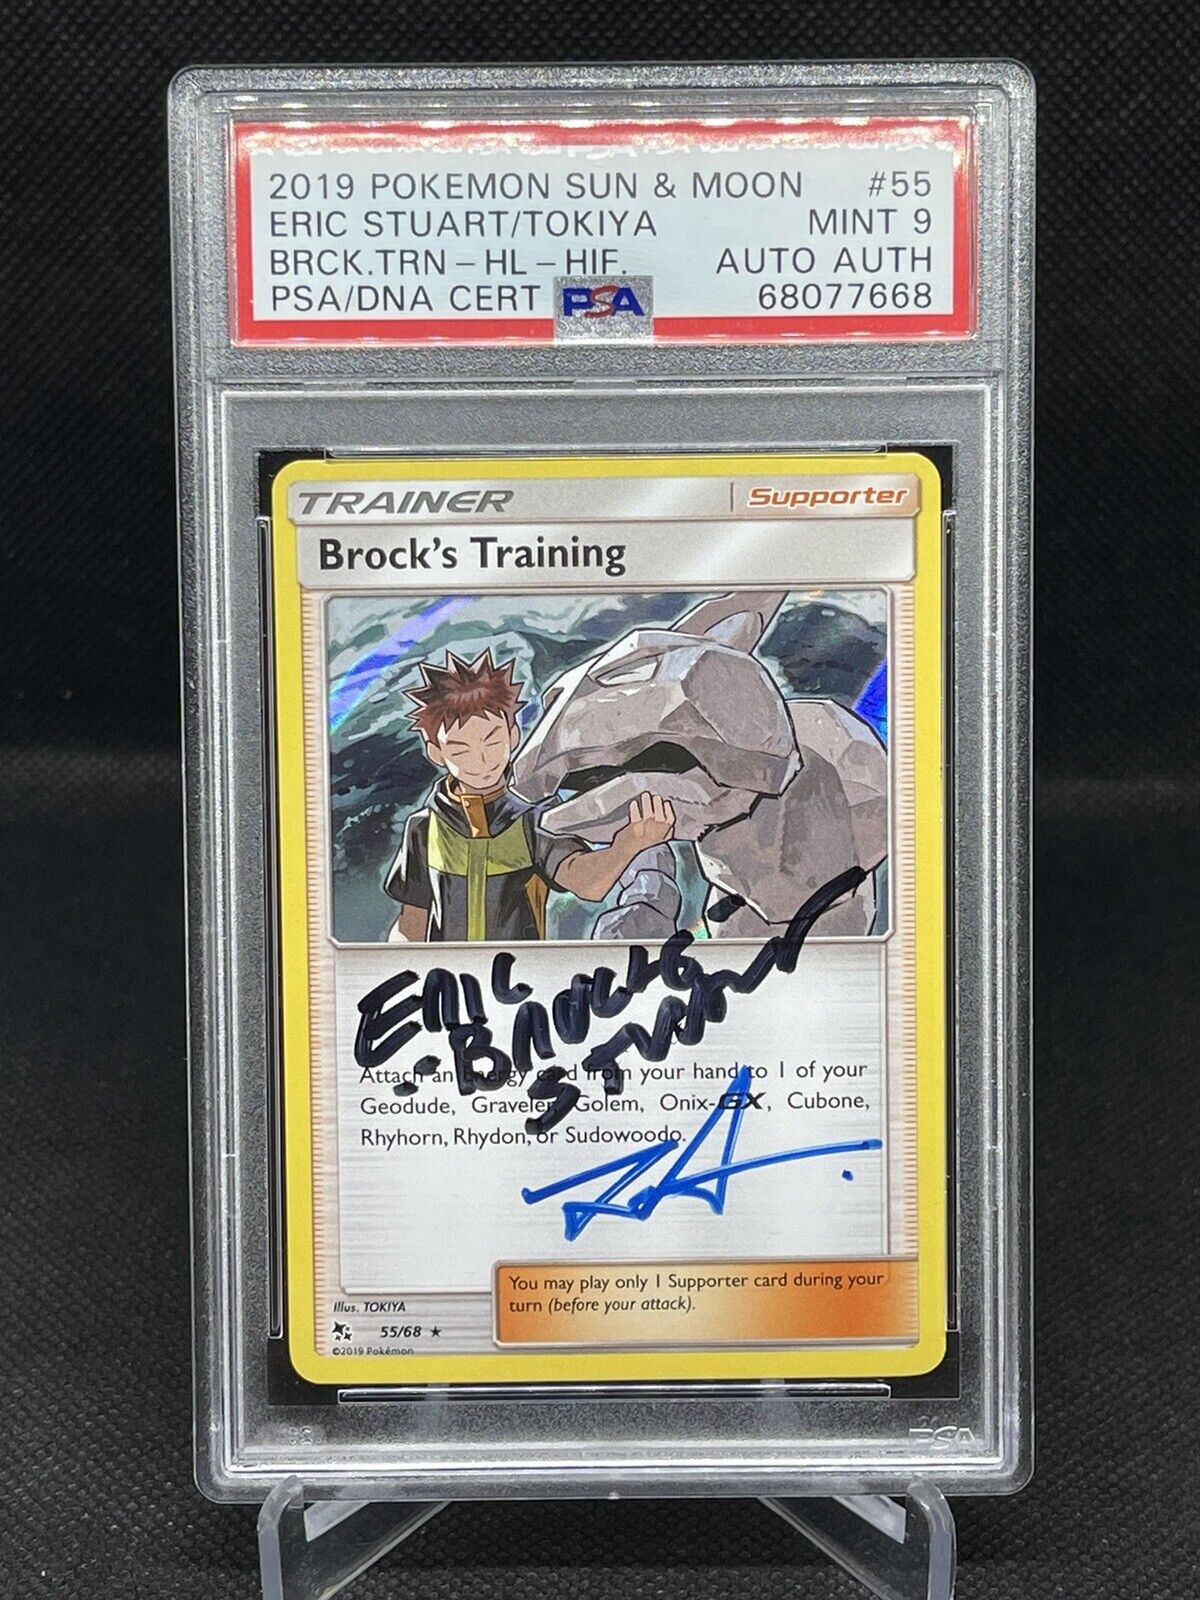 Pokémon Hidden Fates Brock’s Training Auto Tokiya & Eric Stuart Double Autograph